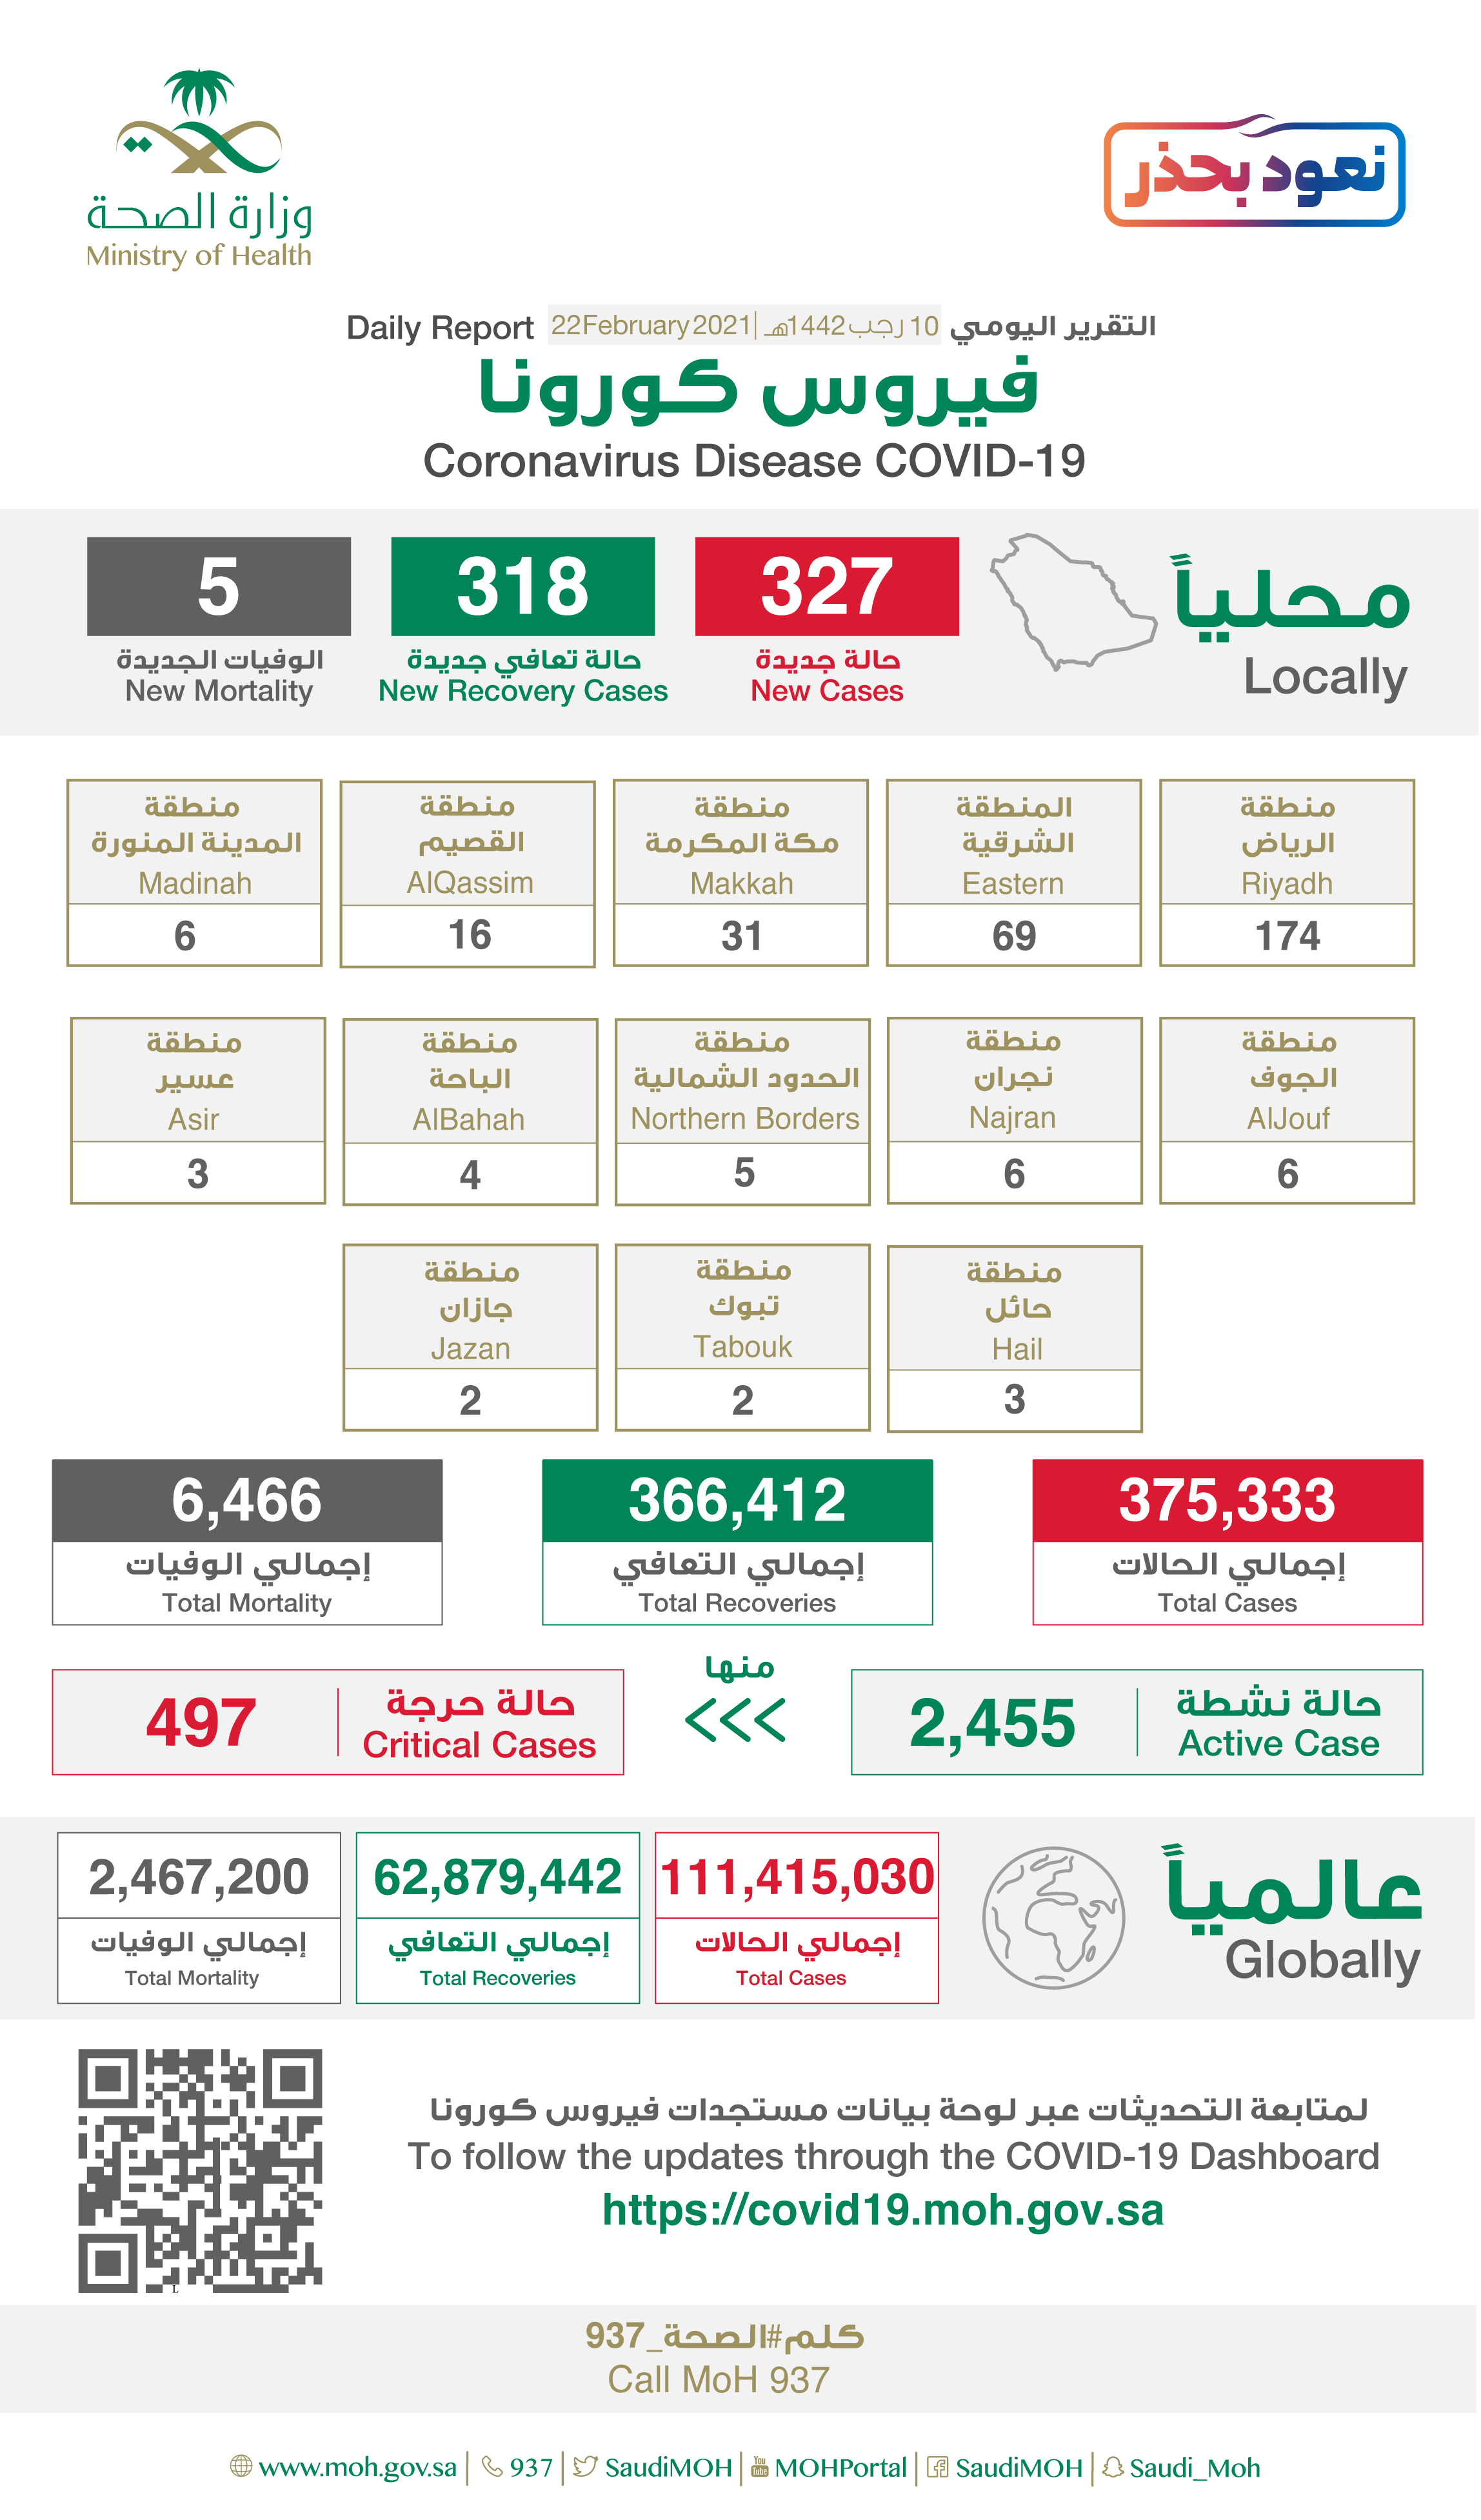 Saudi Arabia Coronavirus : Total Cases :375,333 , New Cases : 327, Cured : 366,412 , Deaths: 6,466, Active Cases : 2,455